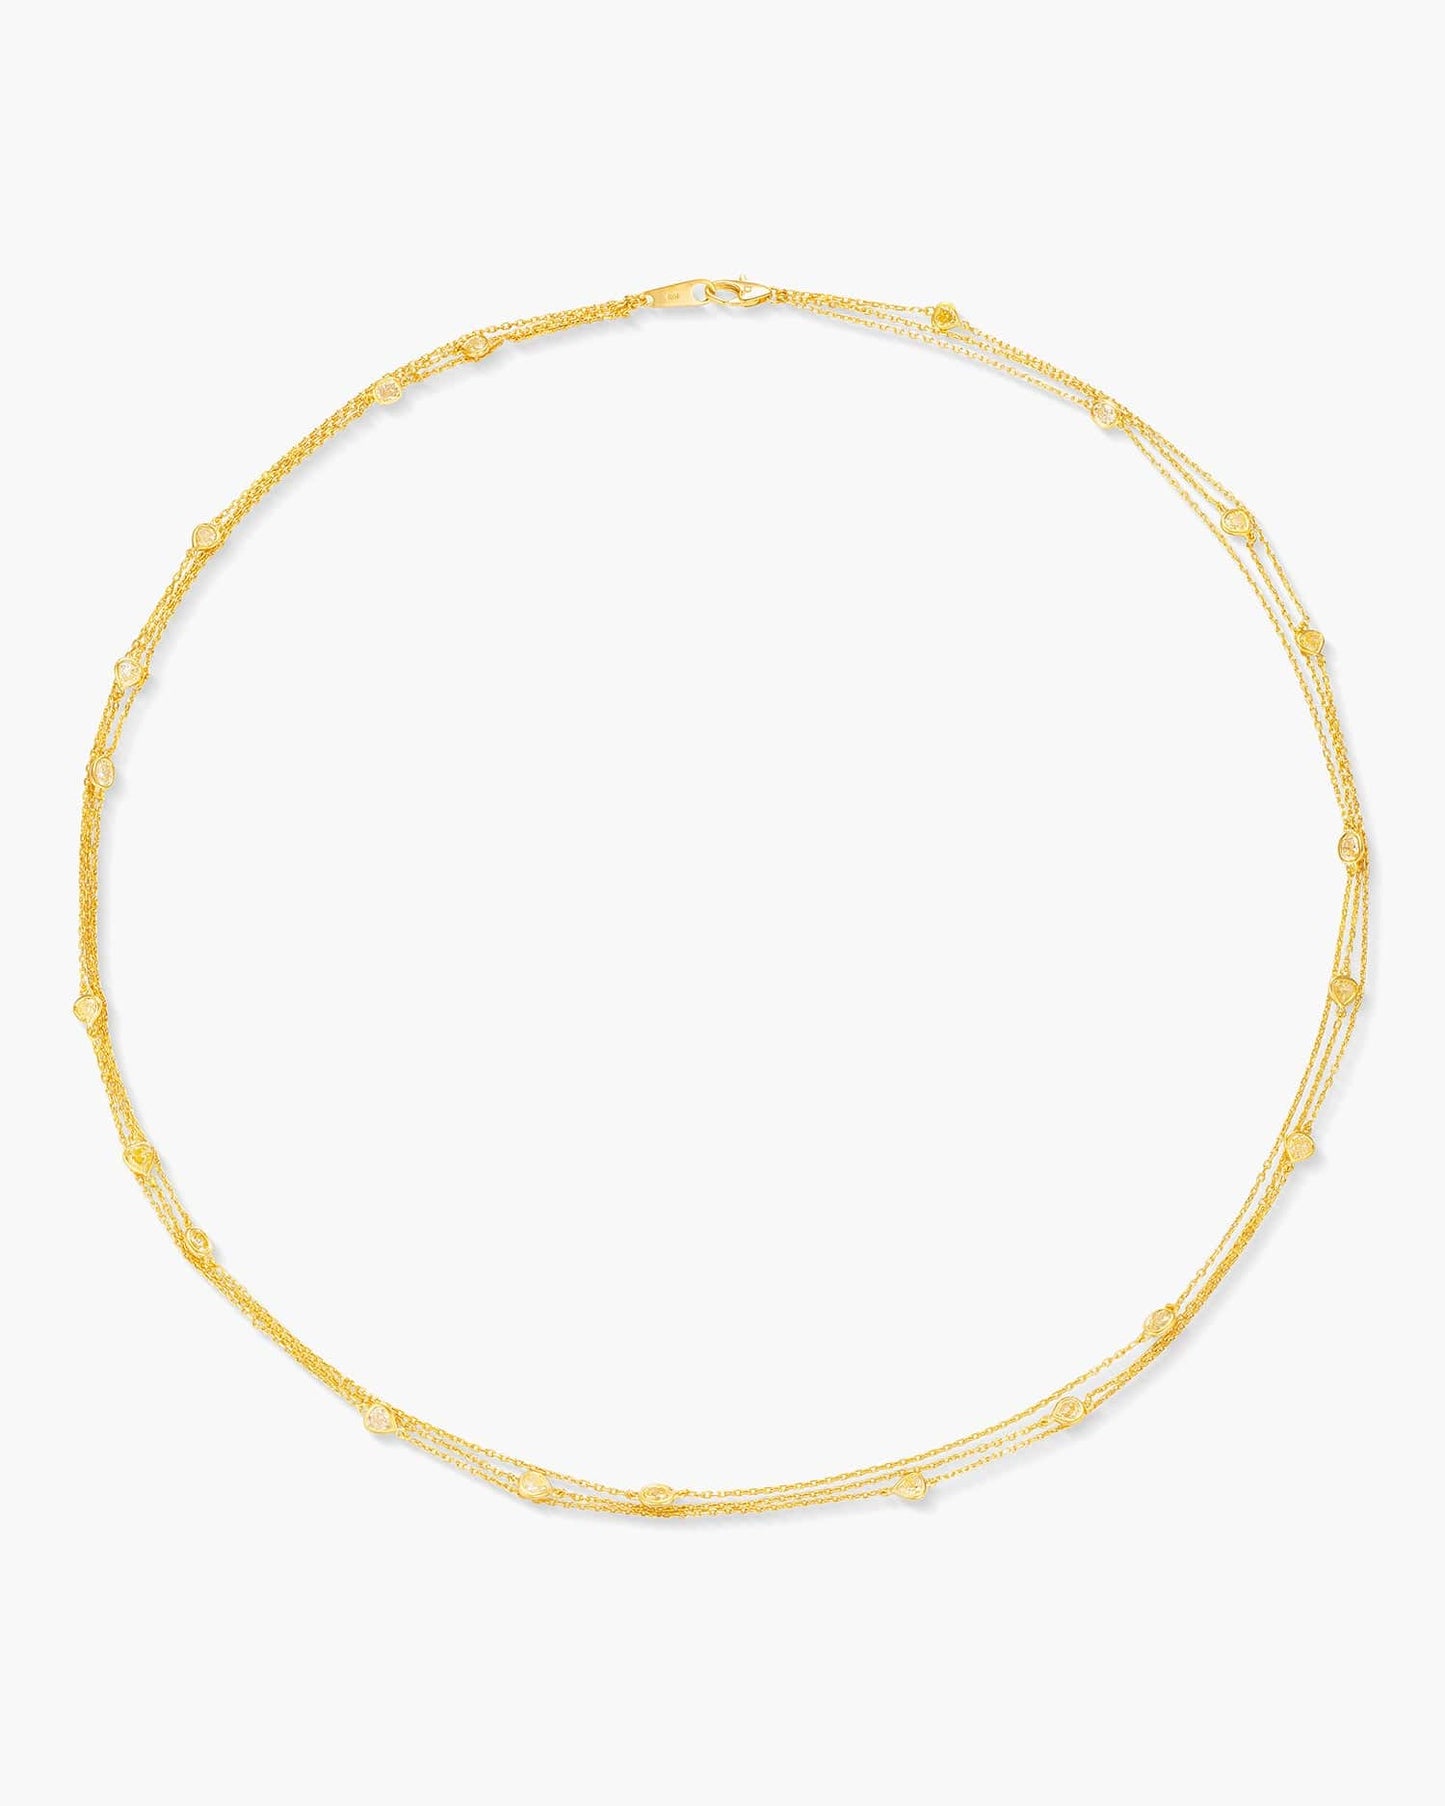 Fancy Shaped Yellow Diamond Necklace, 3.05 carats